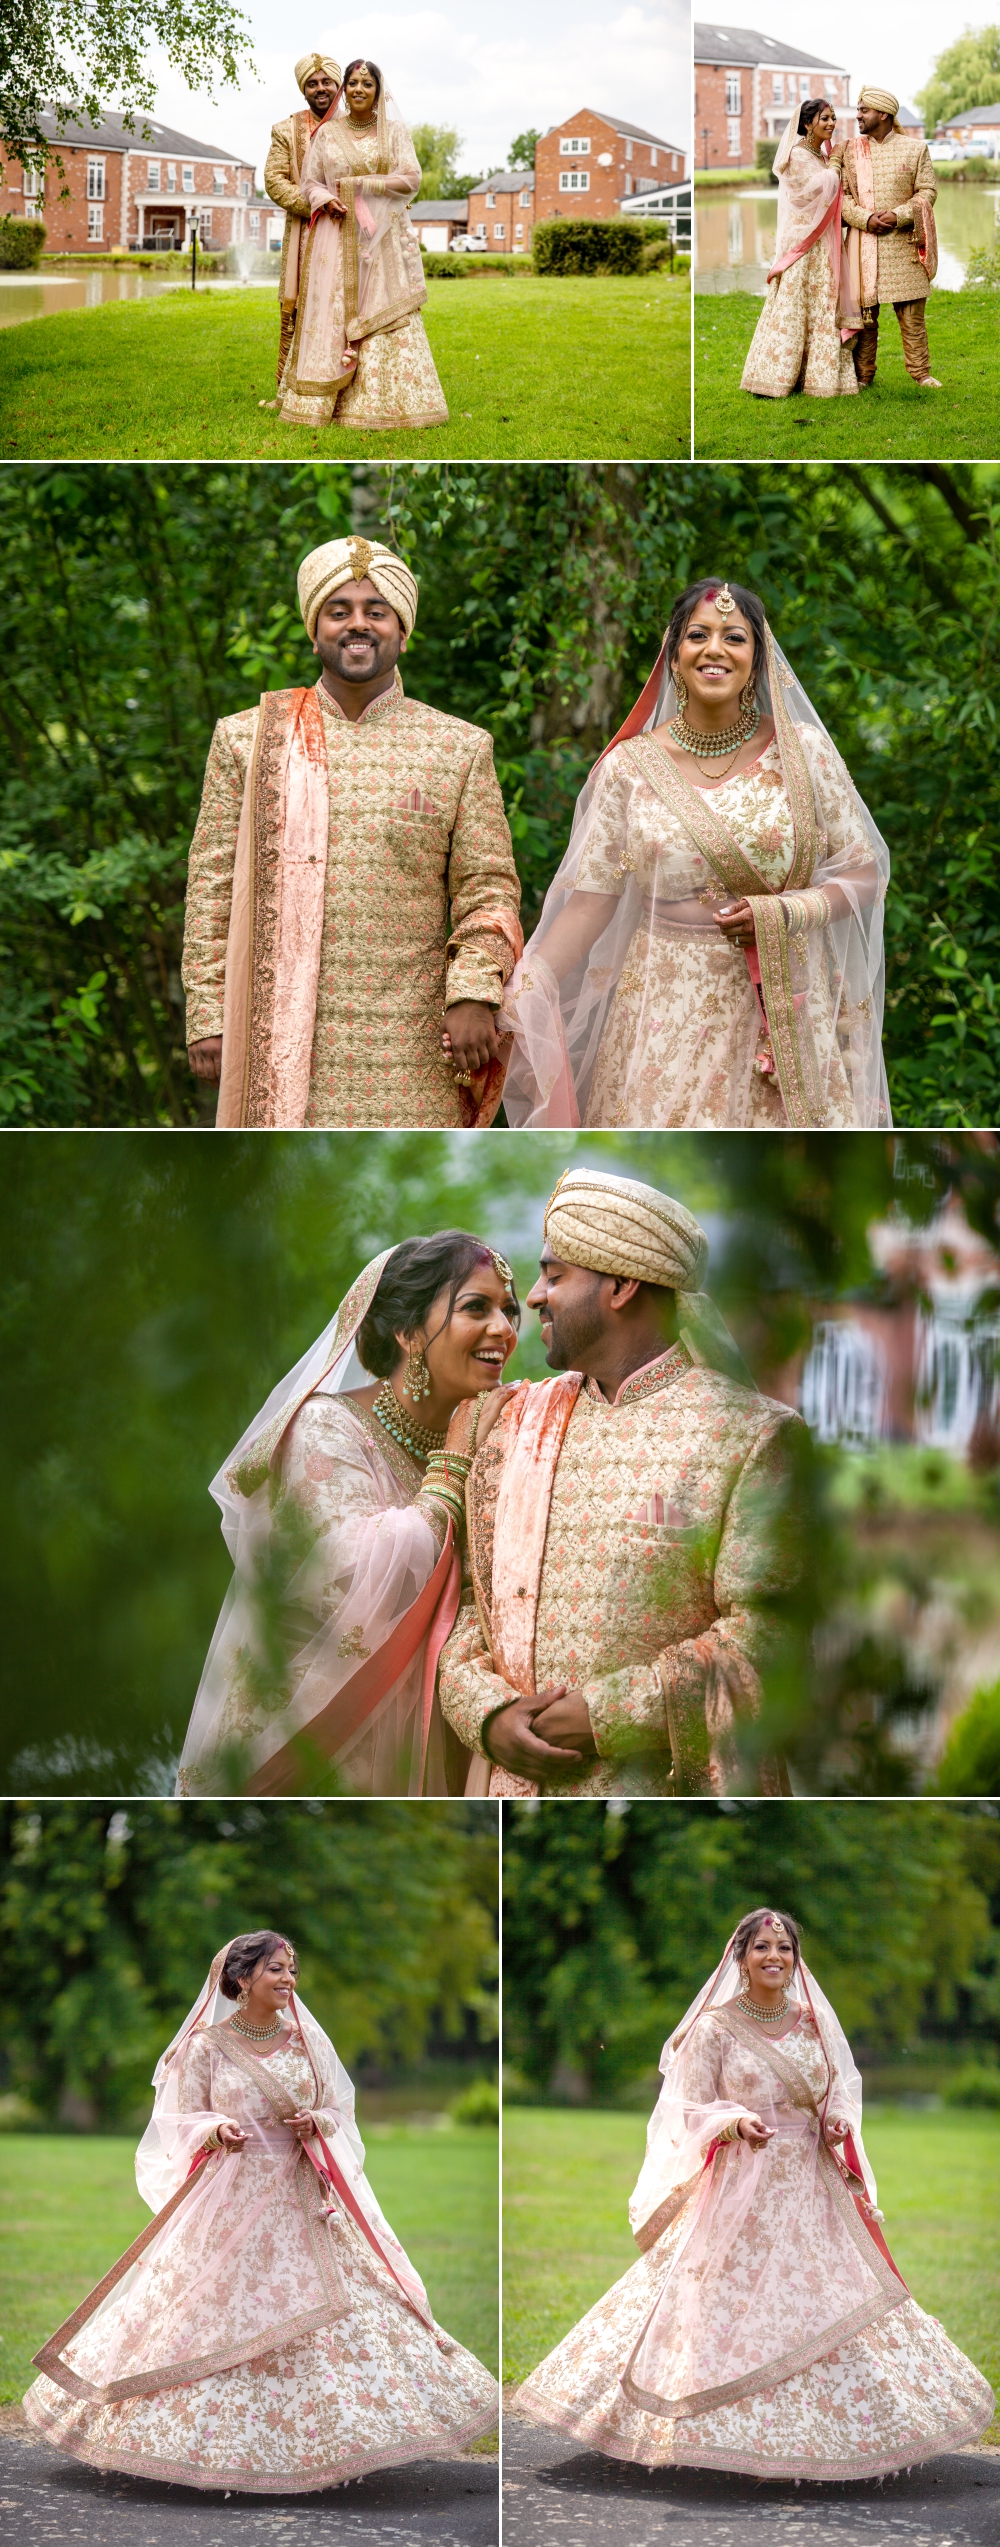 Hindu wedding photography at Lakeside side 11